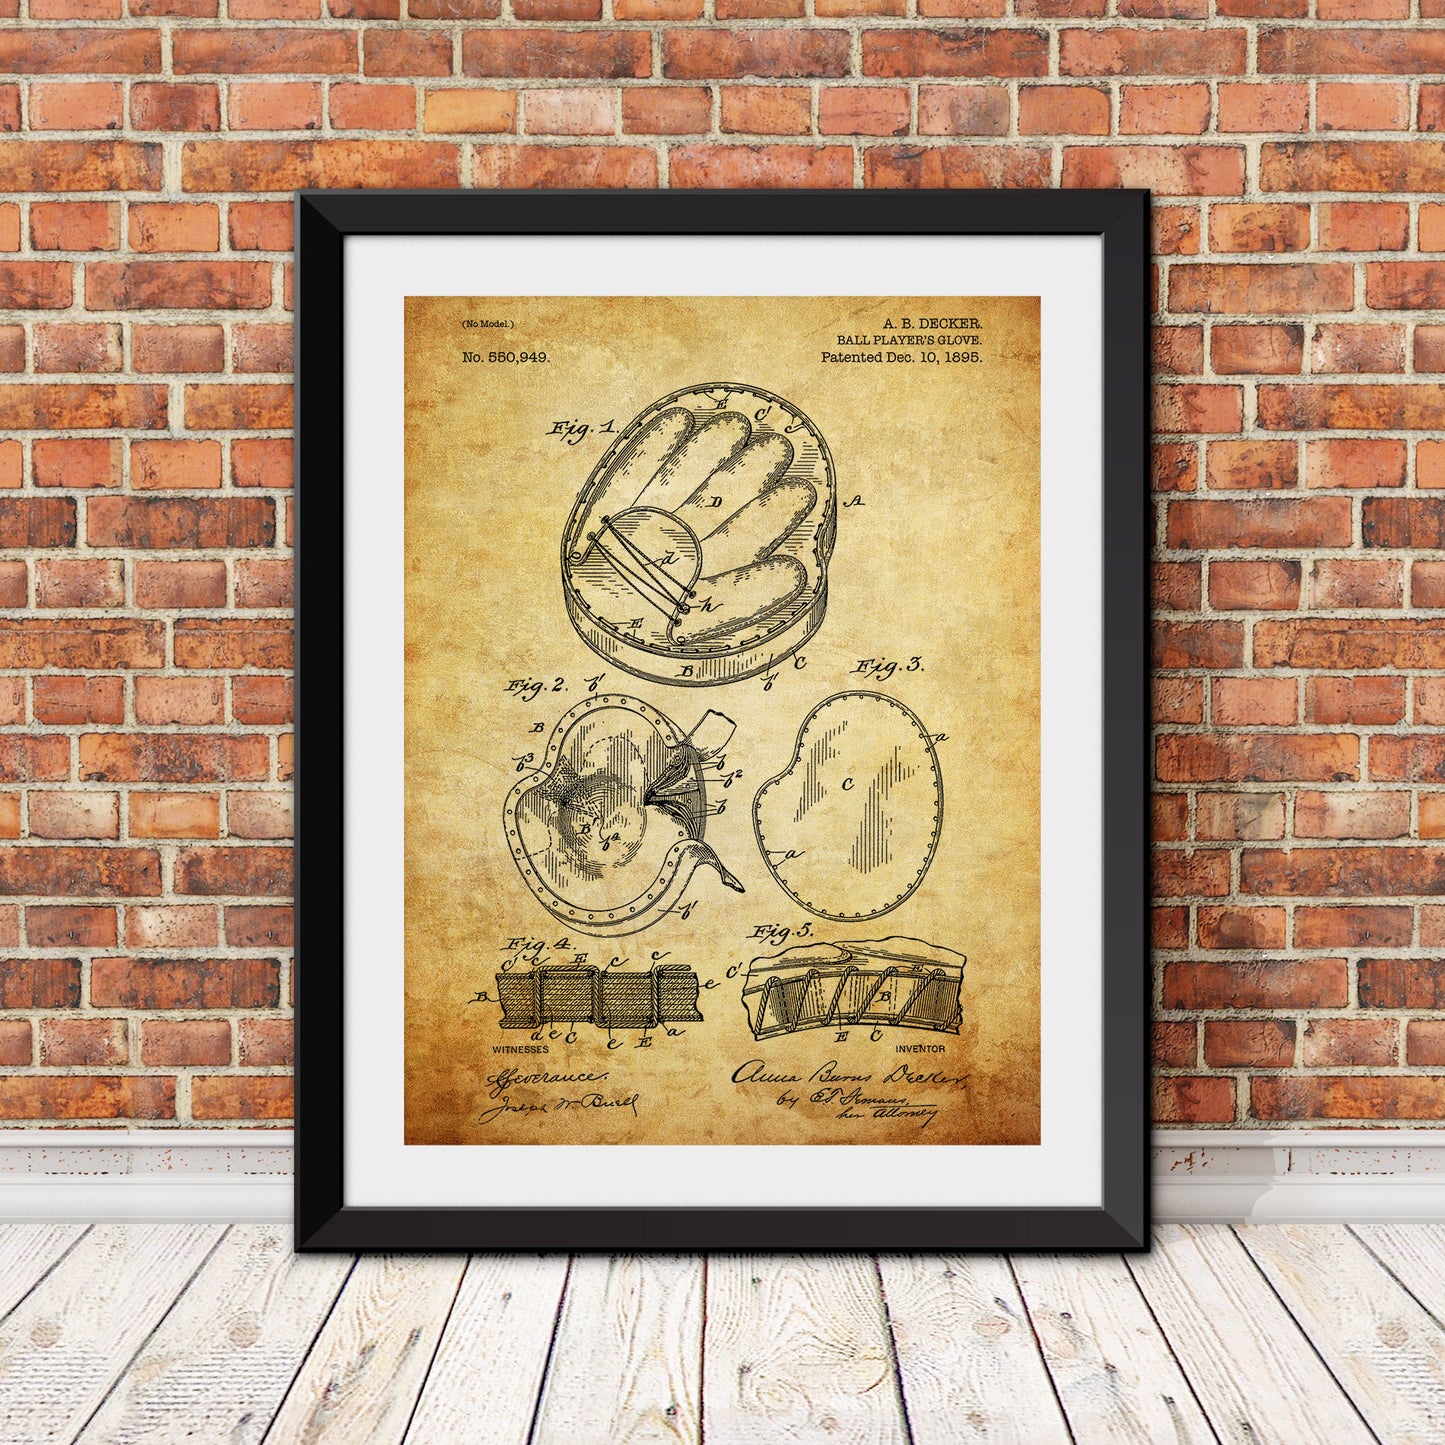 Ball Player Glove Patent Print